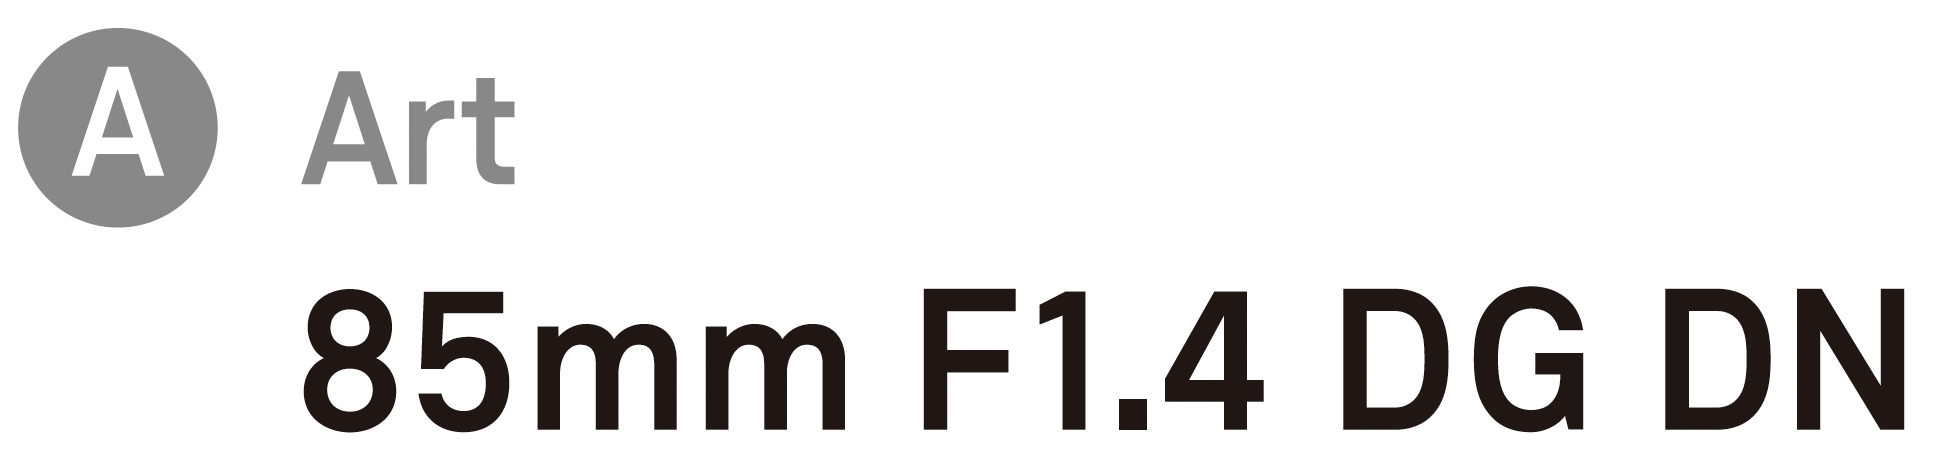 85mm F1.4 DG DN | Art